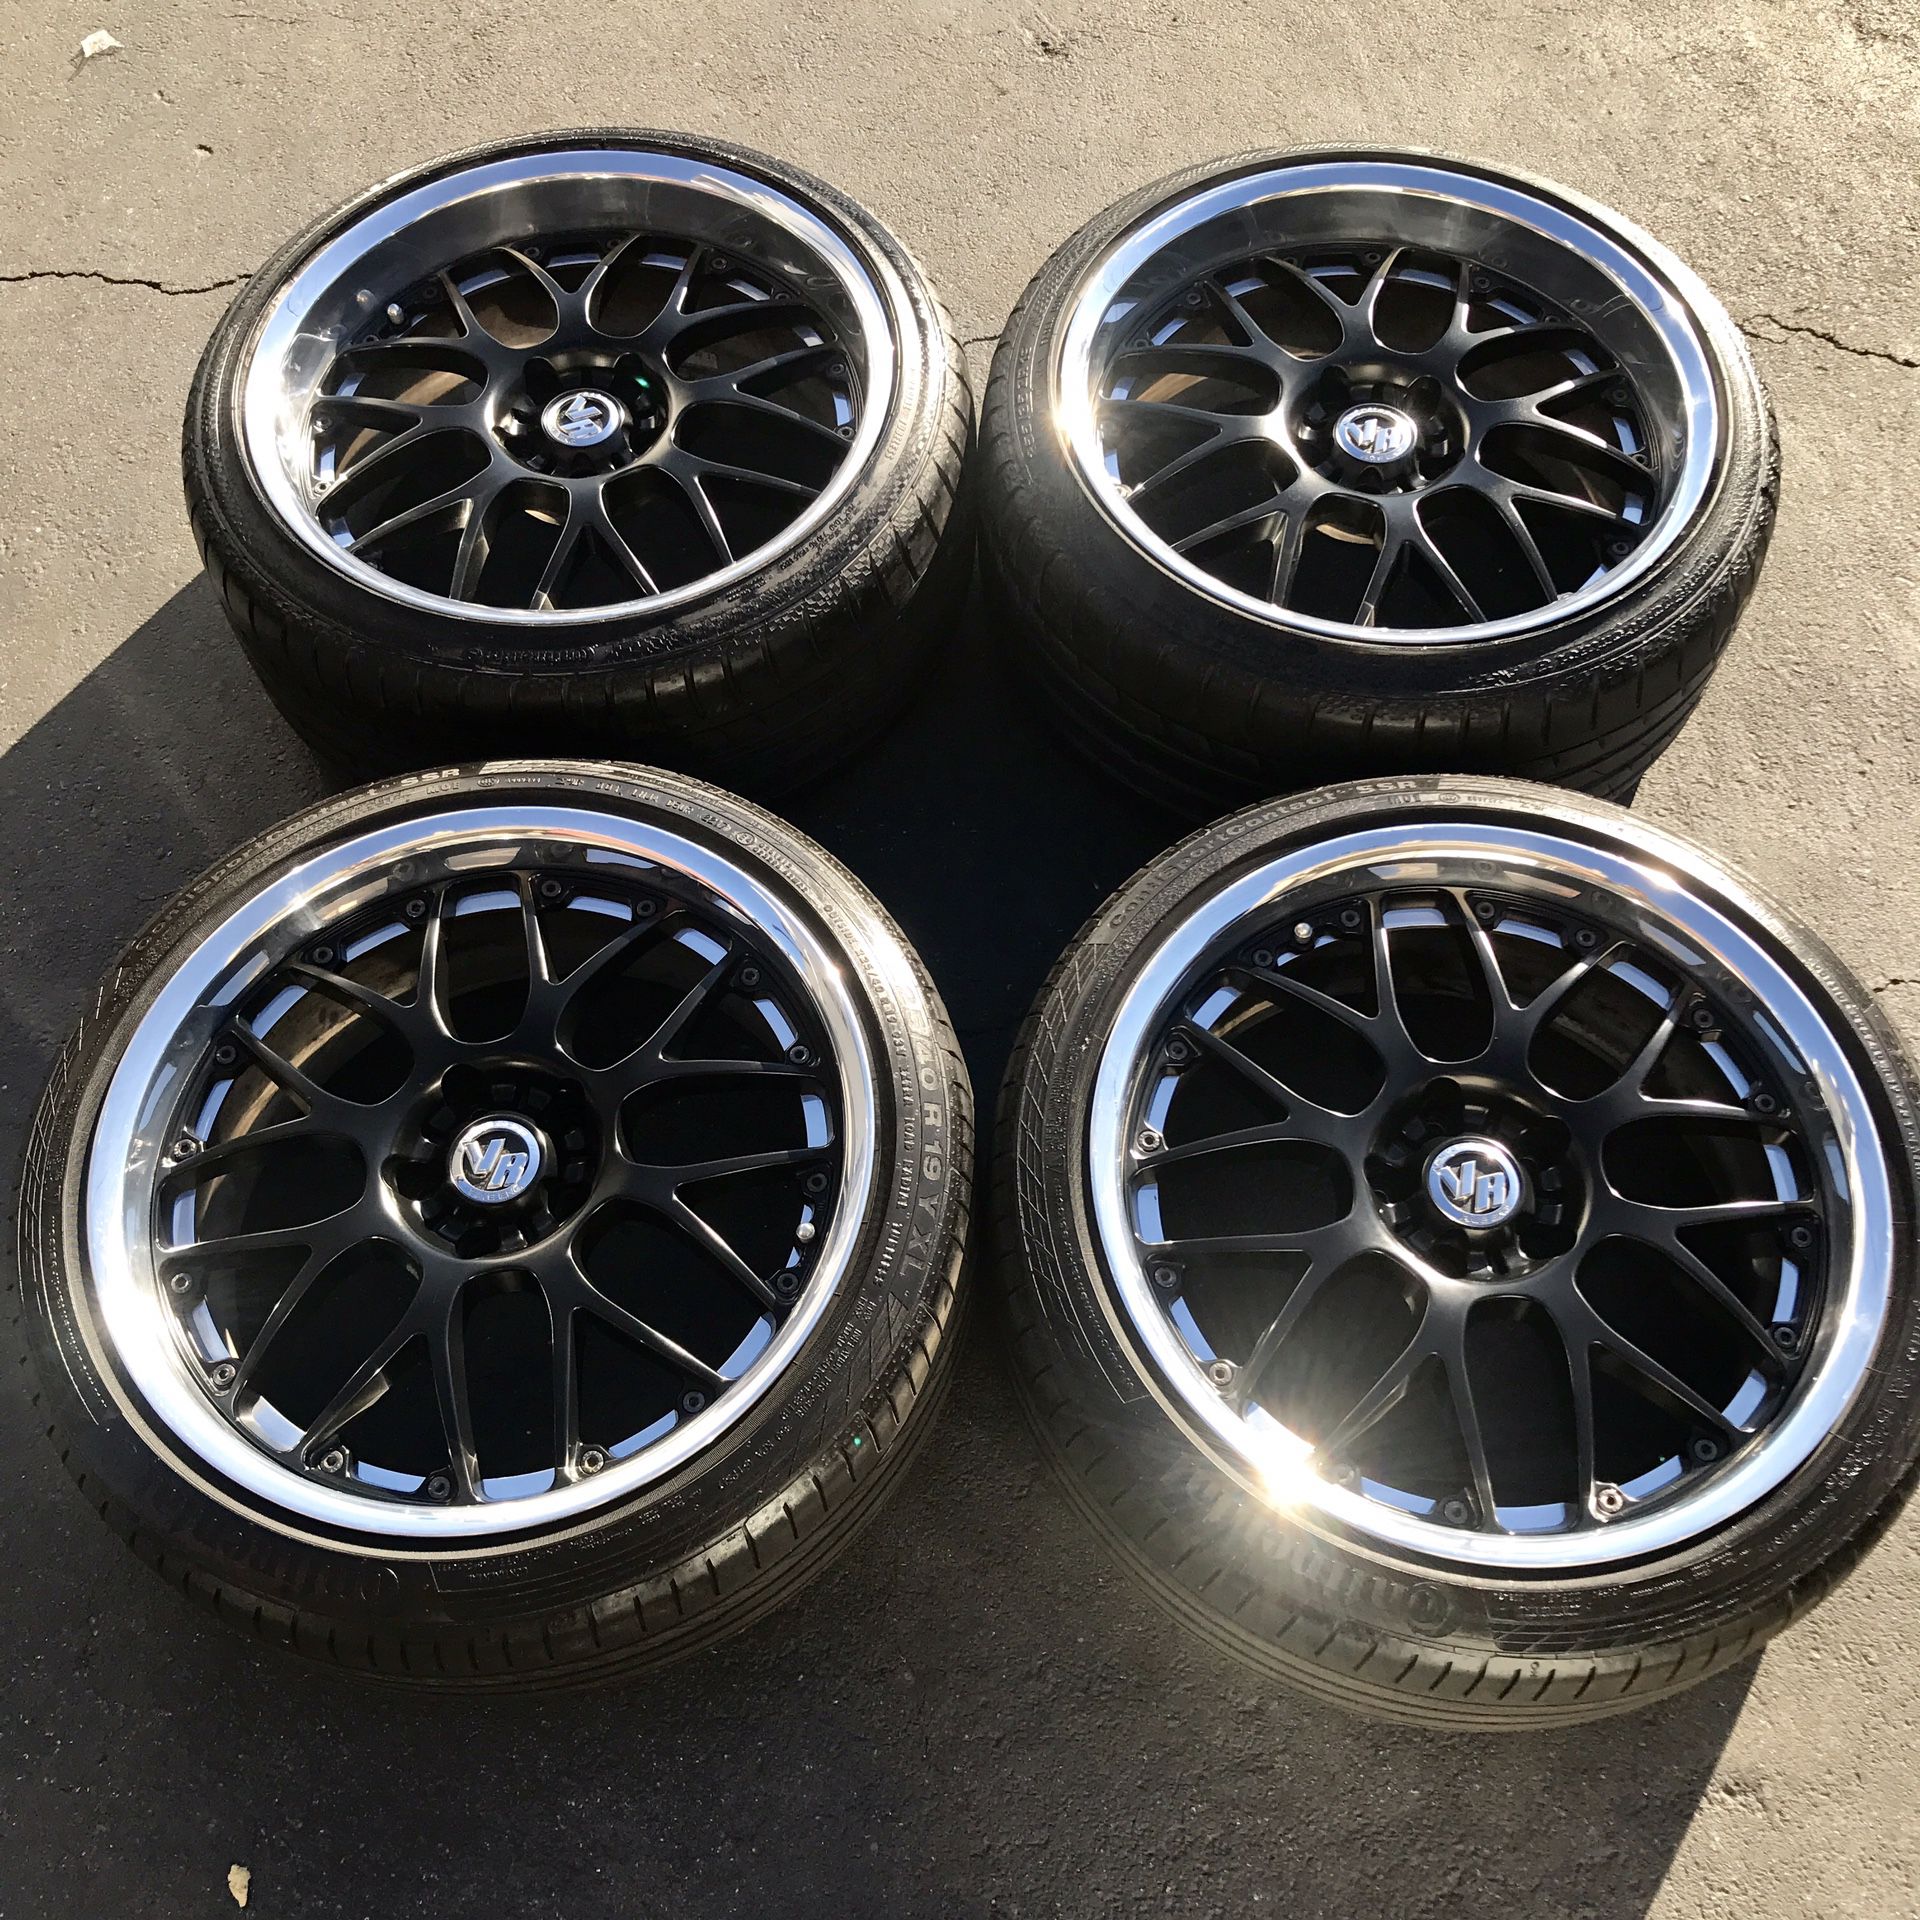 19” Infiniti G37 Volk Racine Rays Eng wheels 19 inch black rims 2 piece wheels continental Infiniti